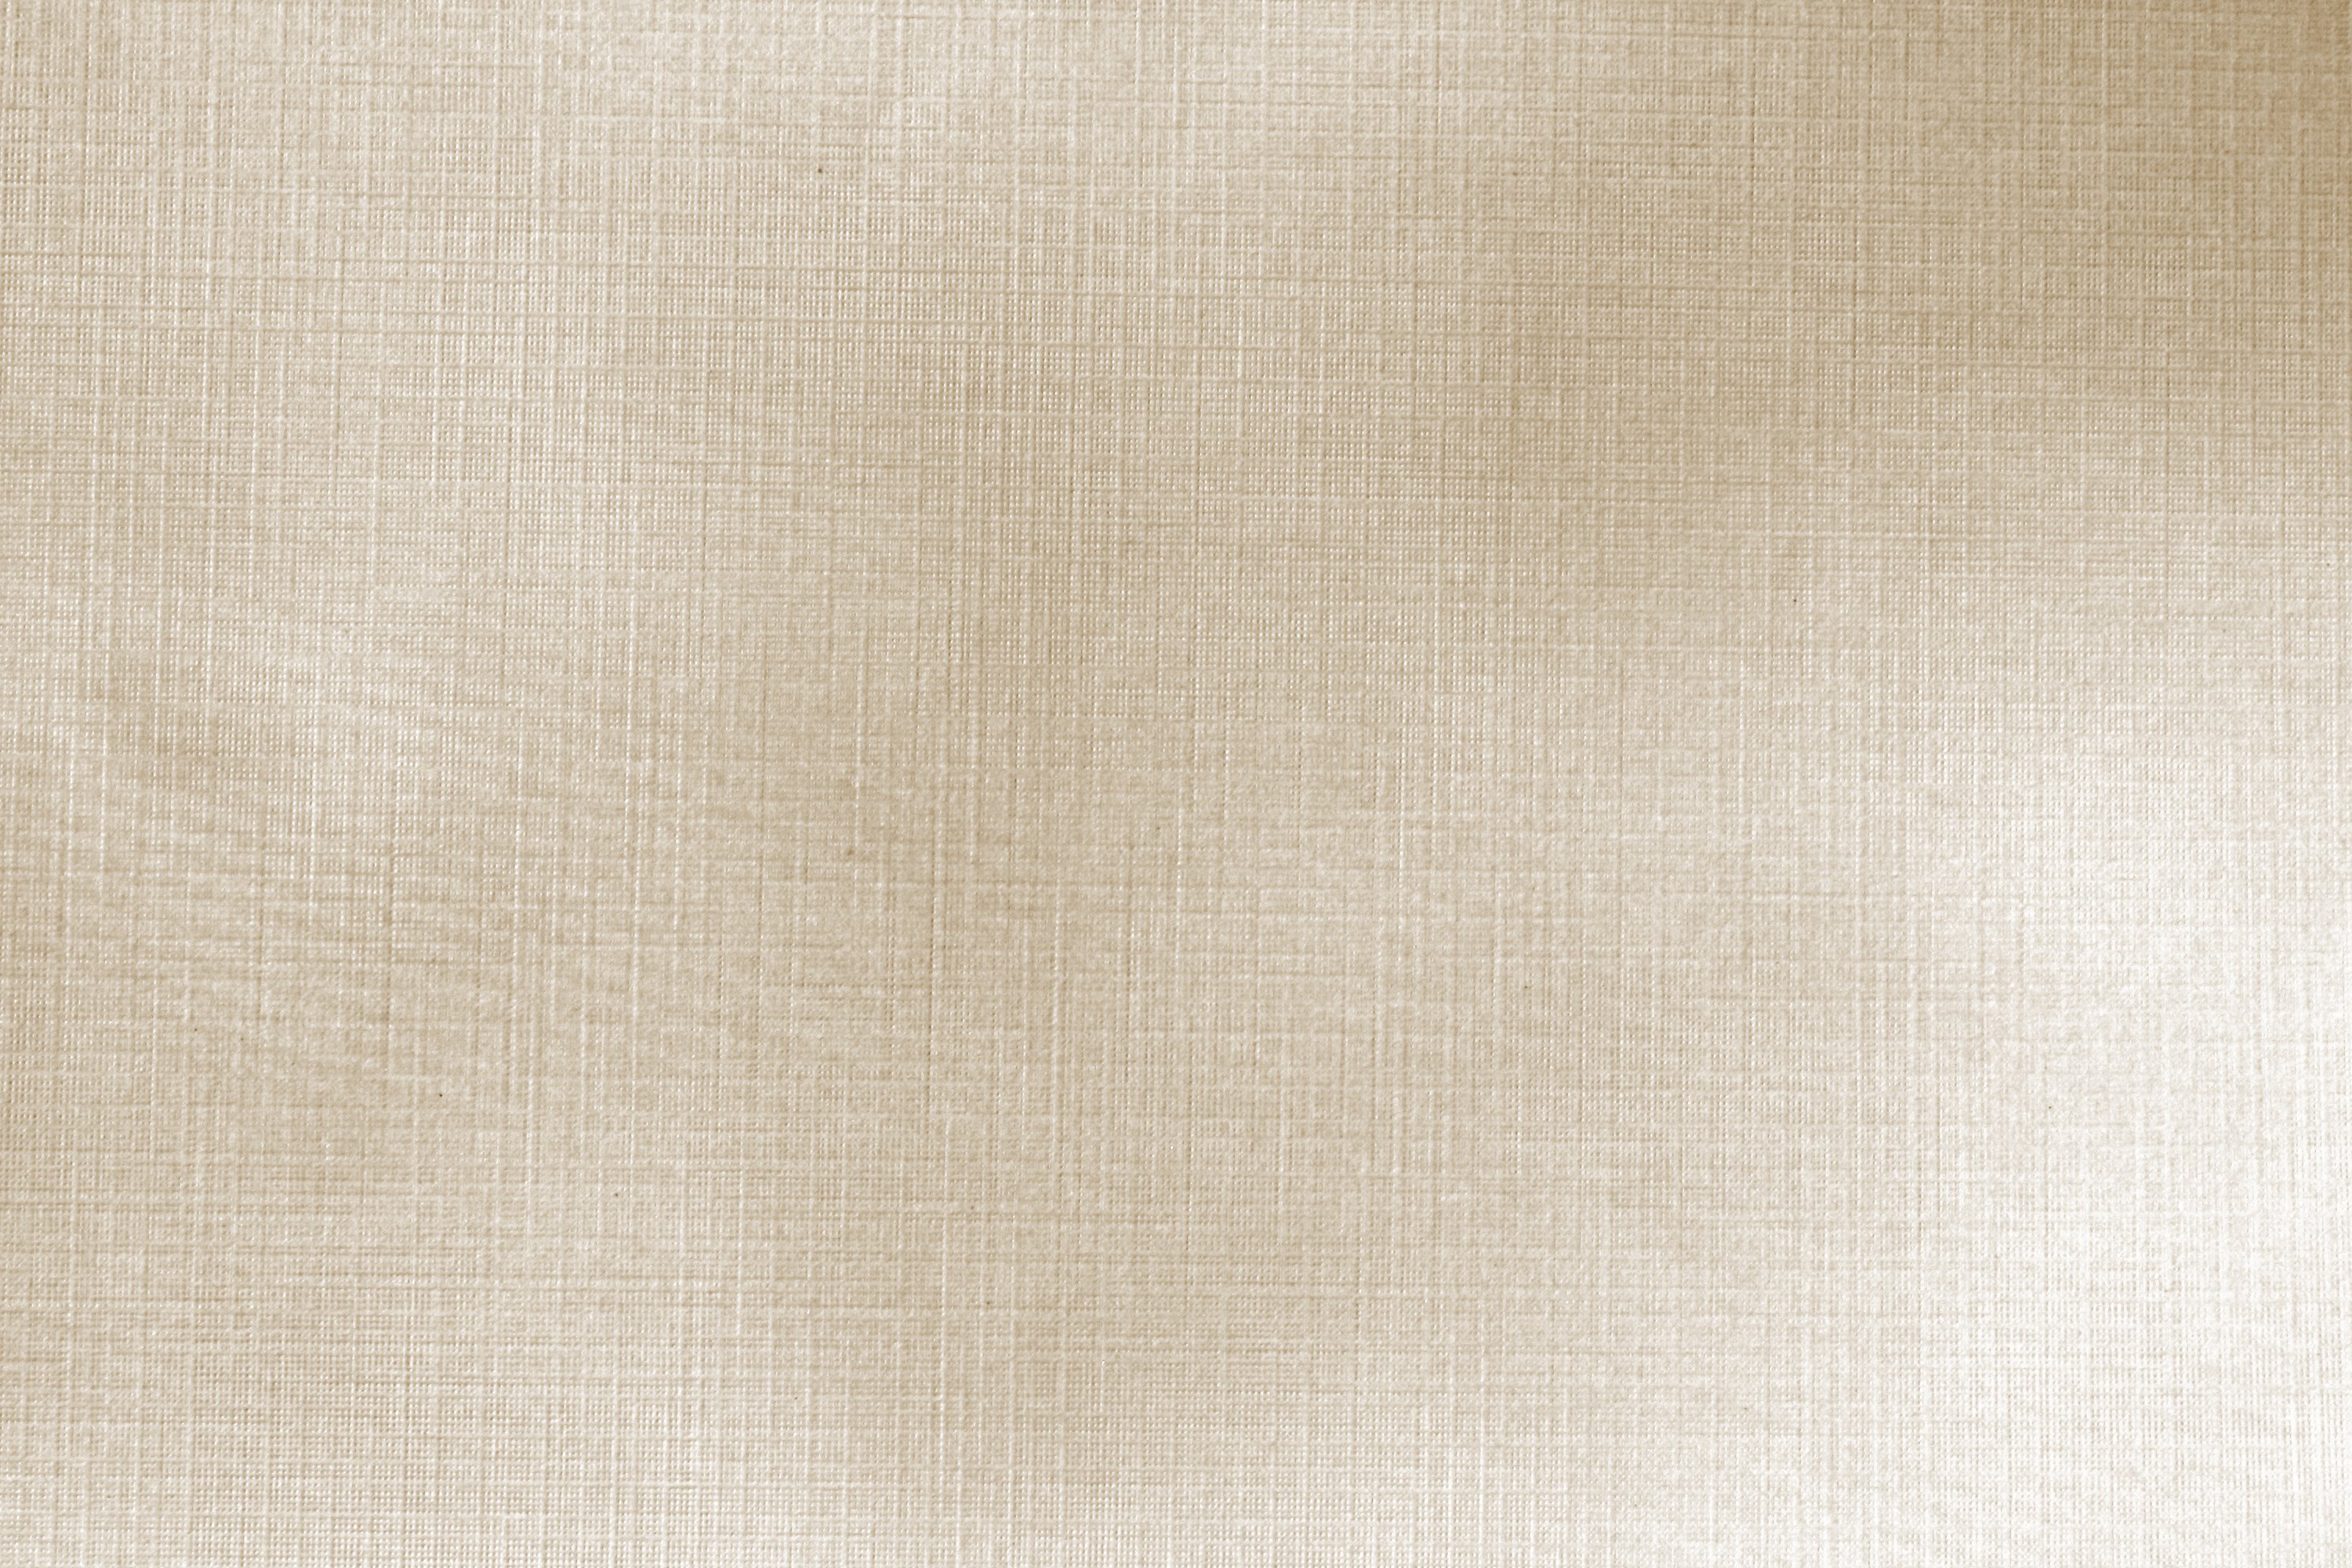 Linen Paper Texture Images - Free Download on Freepik